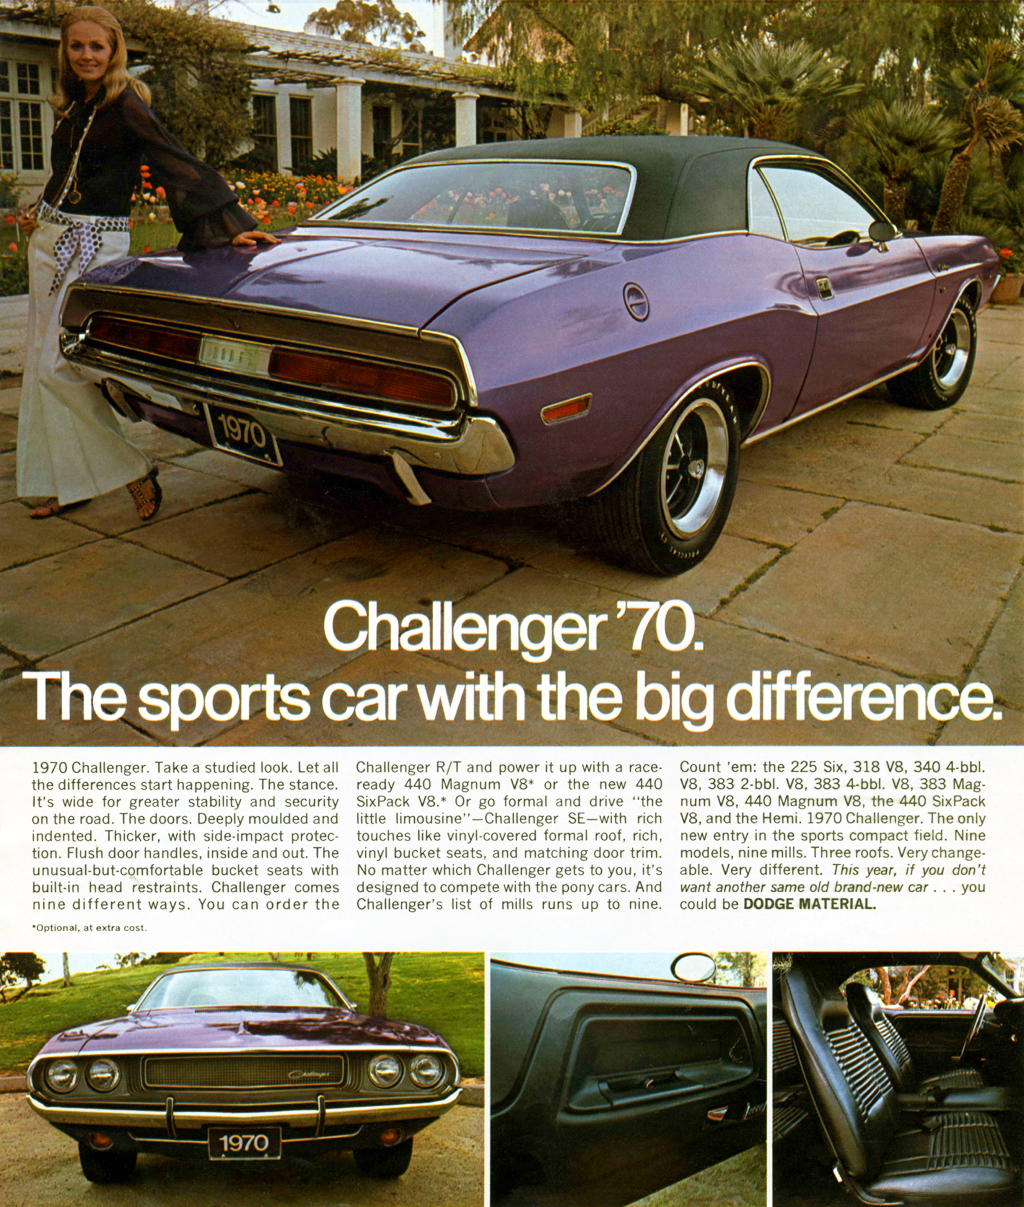 https://www.classiccarstodayonline.com/wp-content/uploads/2012/07/1970-Dodge-Challenger-ad-girl.jpg